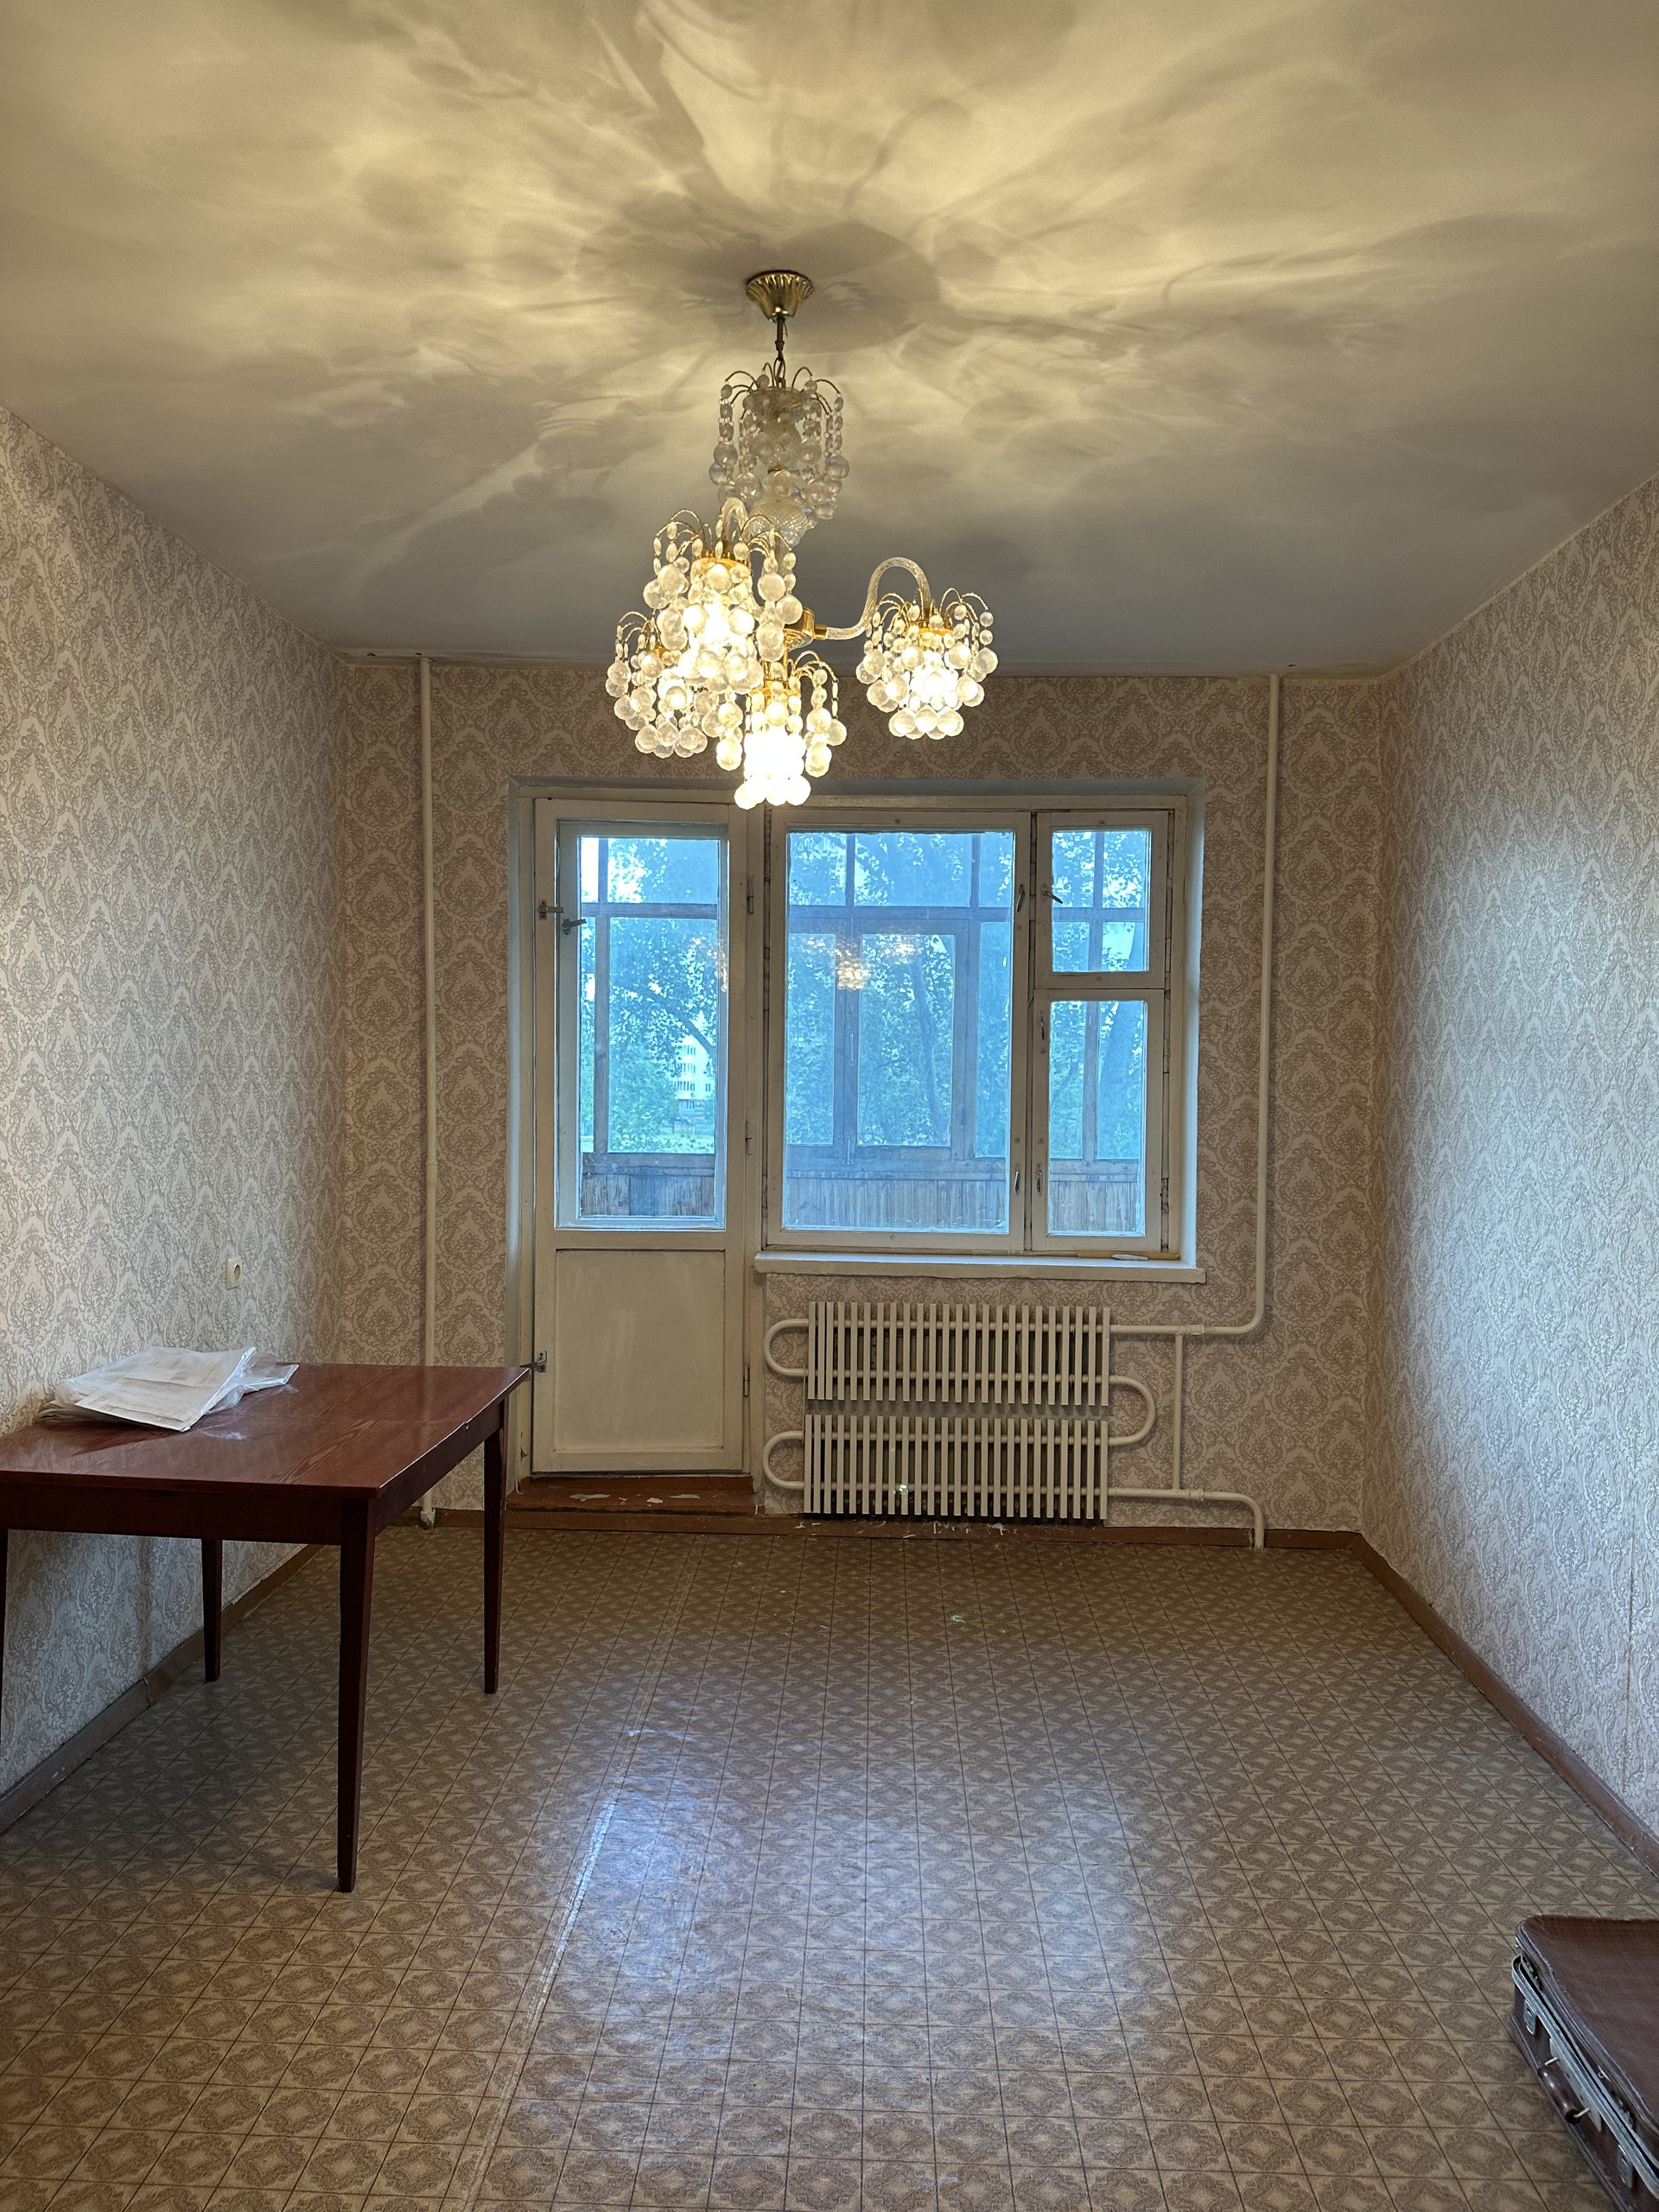 Курск улица Косухина новый район купить 4х комнатную квартиру.